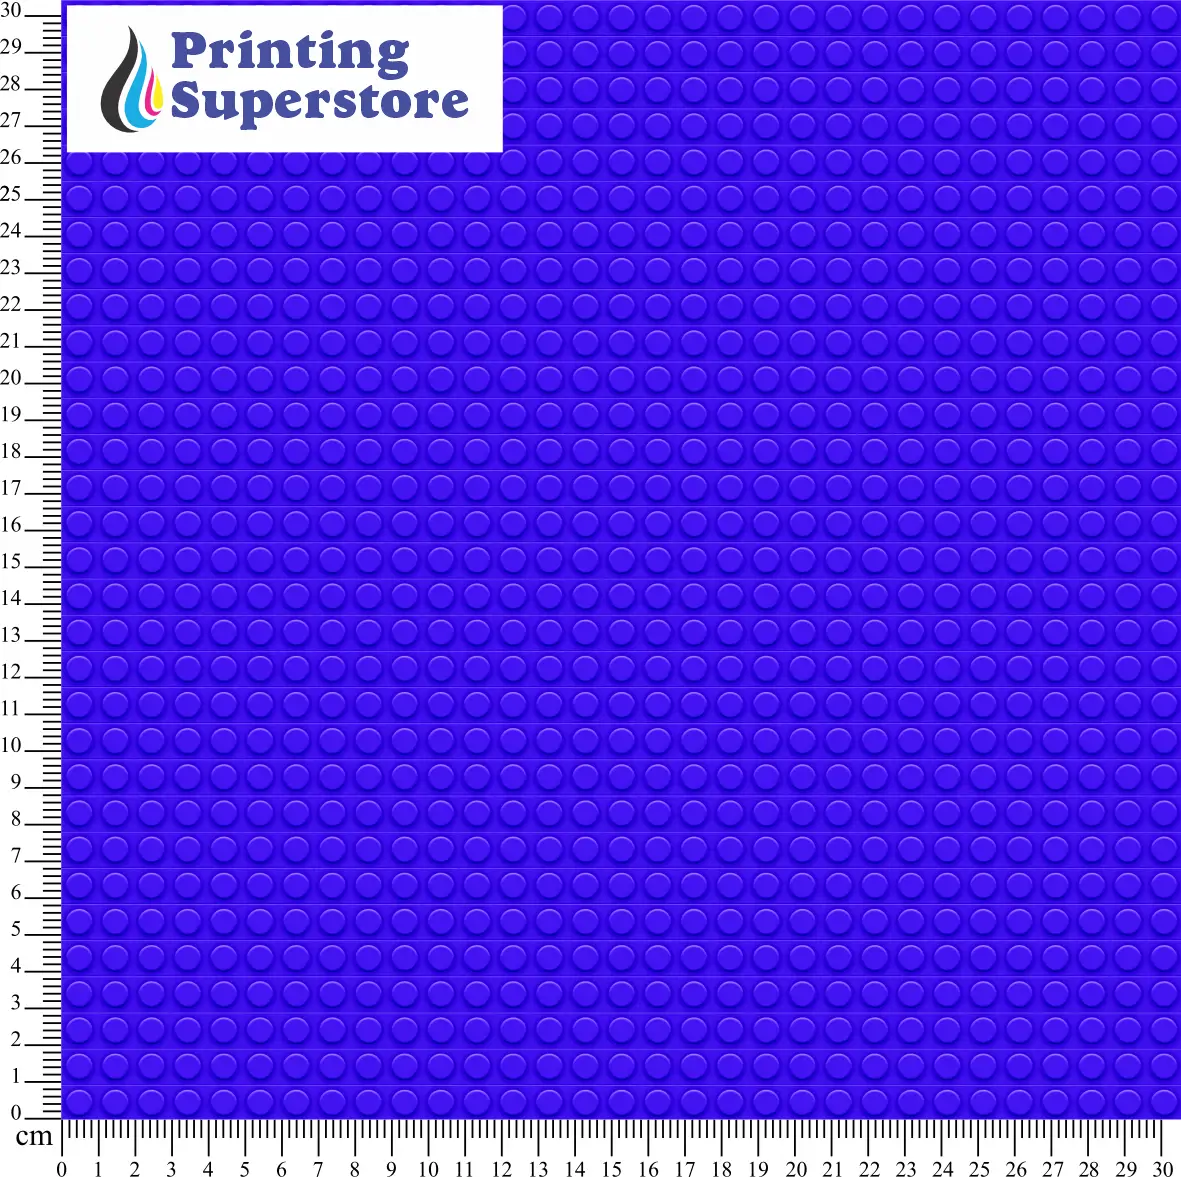 Building Block theme pattern printed on Self Adhesive Vinyl (SAV), Heat Transfer Vinyl (HTV) and Cardstock.